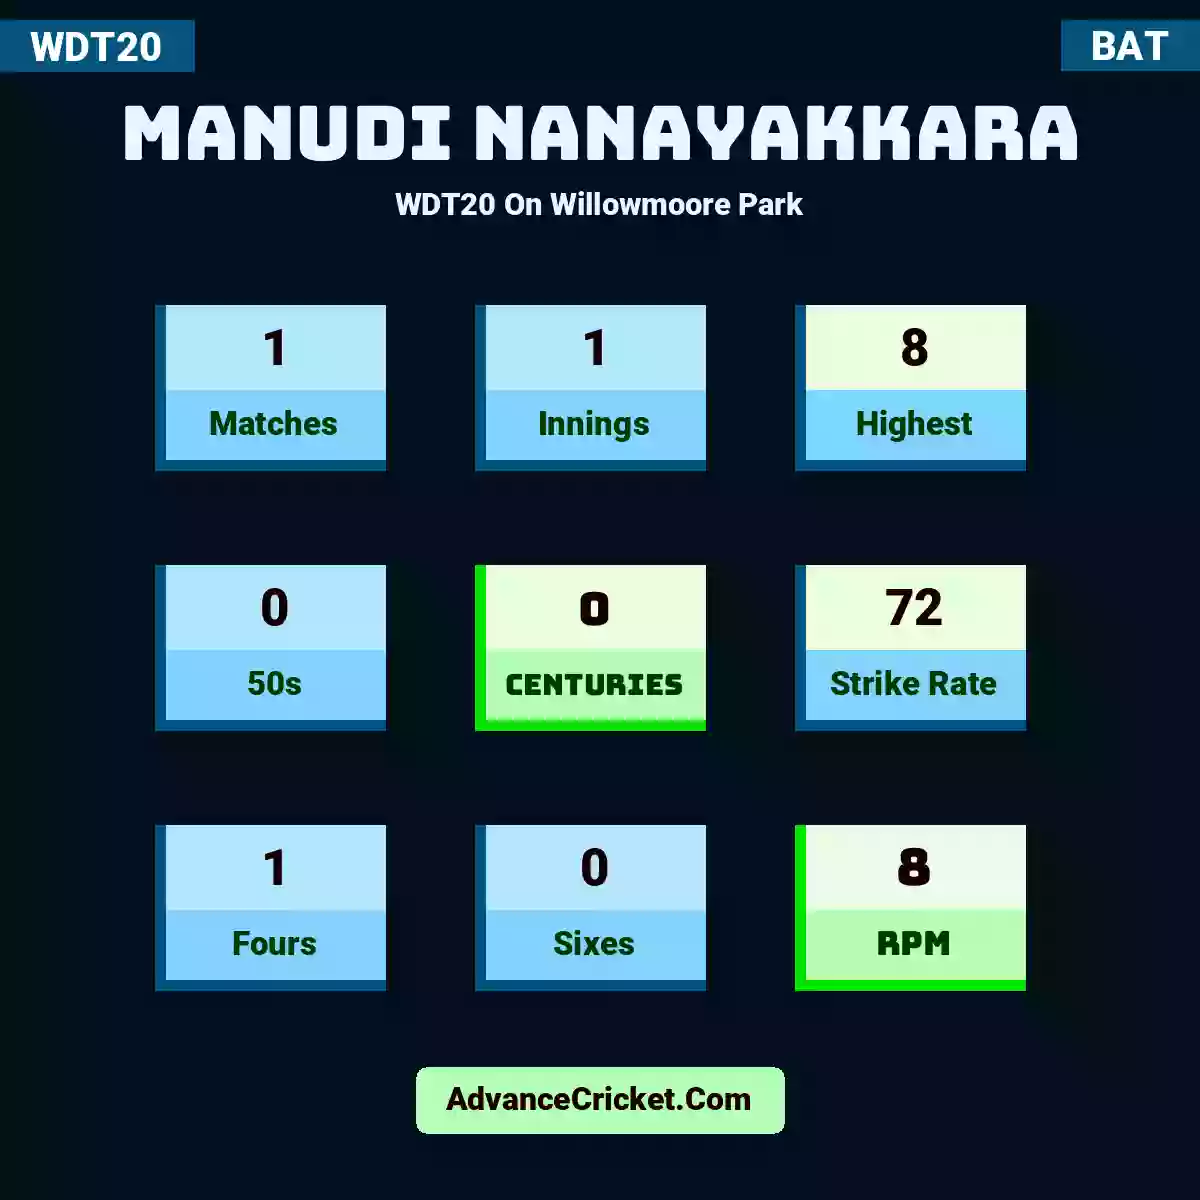 Manudi Nanayakkara WDT20  On Willowmoore Park, Manudi Nanayakkara played 1 matches, scored 8 runs as highest, 0 half-centuries, and 0 centuries, with a strike rate of 72. M.Nanayakkara hit 1 fours and 0 sixes, with an RPM of 8.